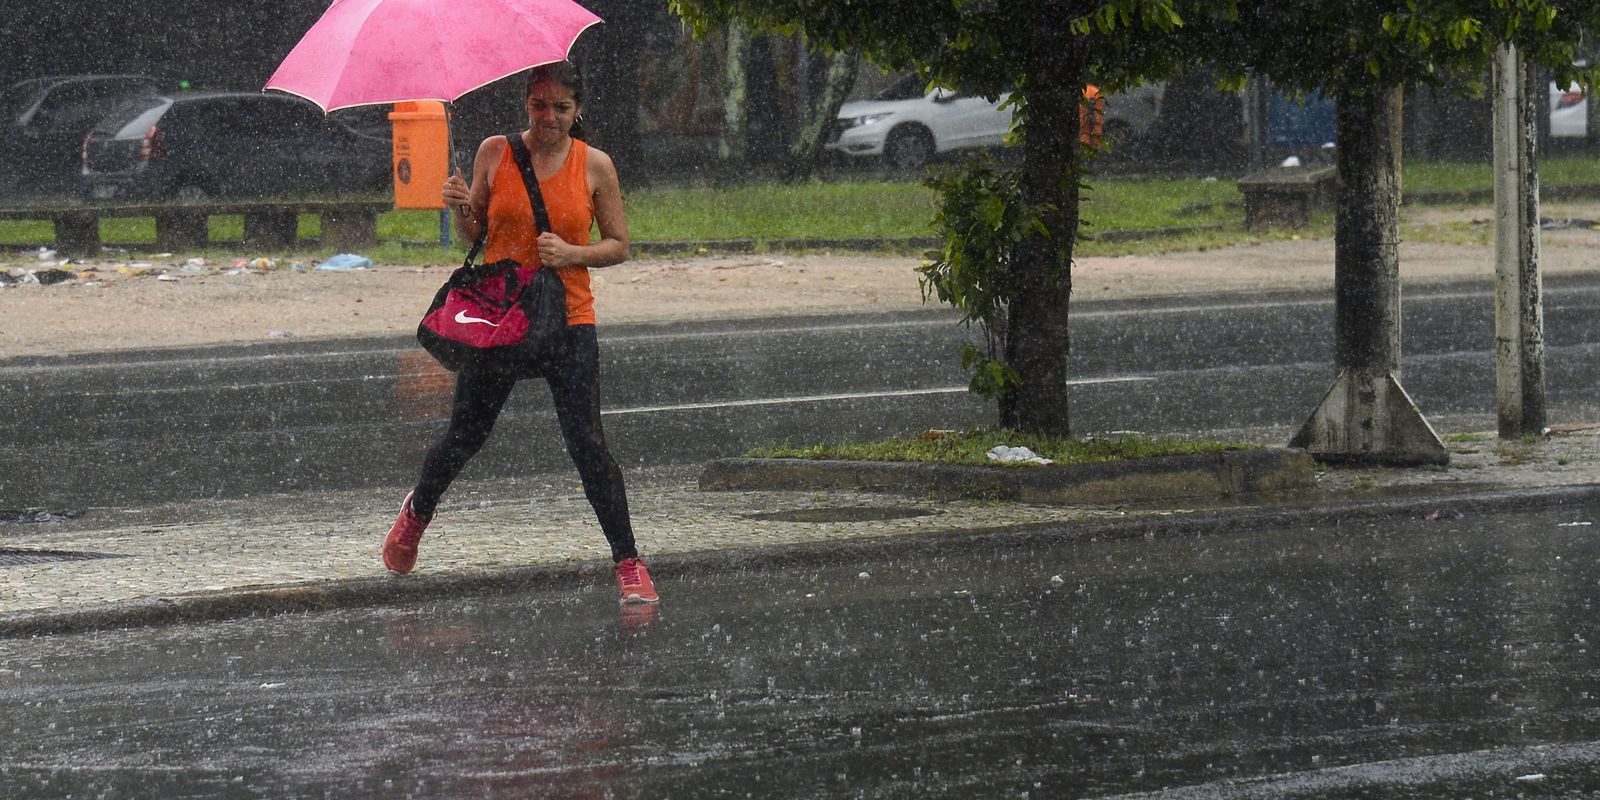 Rio had 85% above average rainfall for February